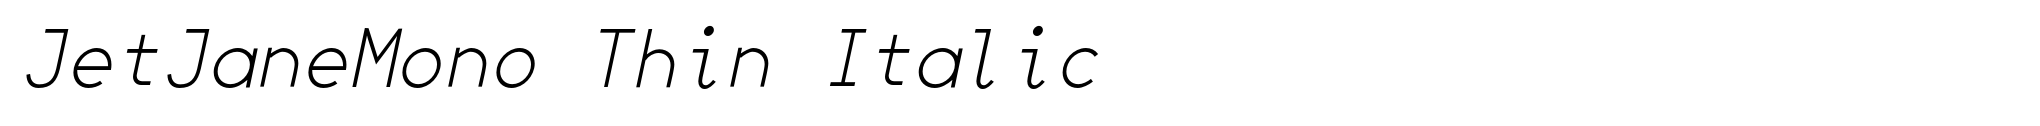 JetJaneMono Thin Italic image